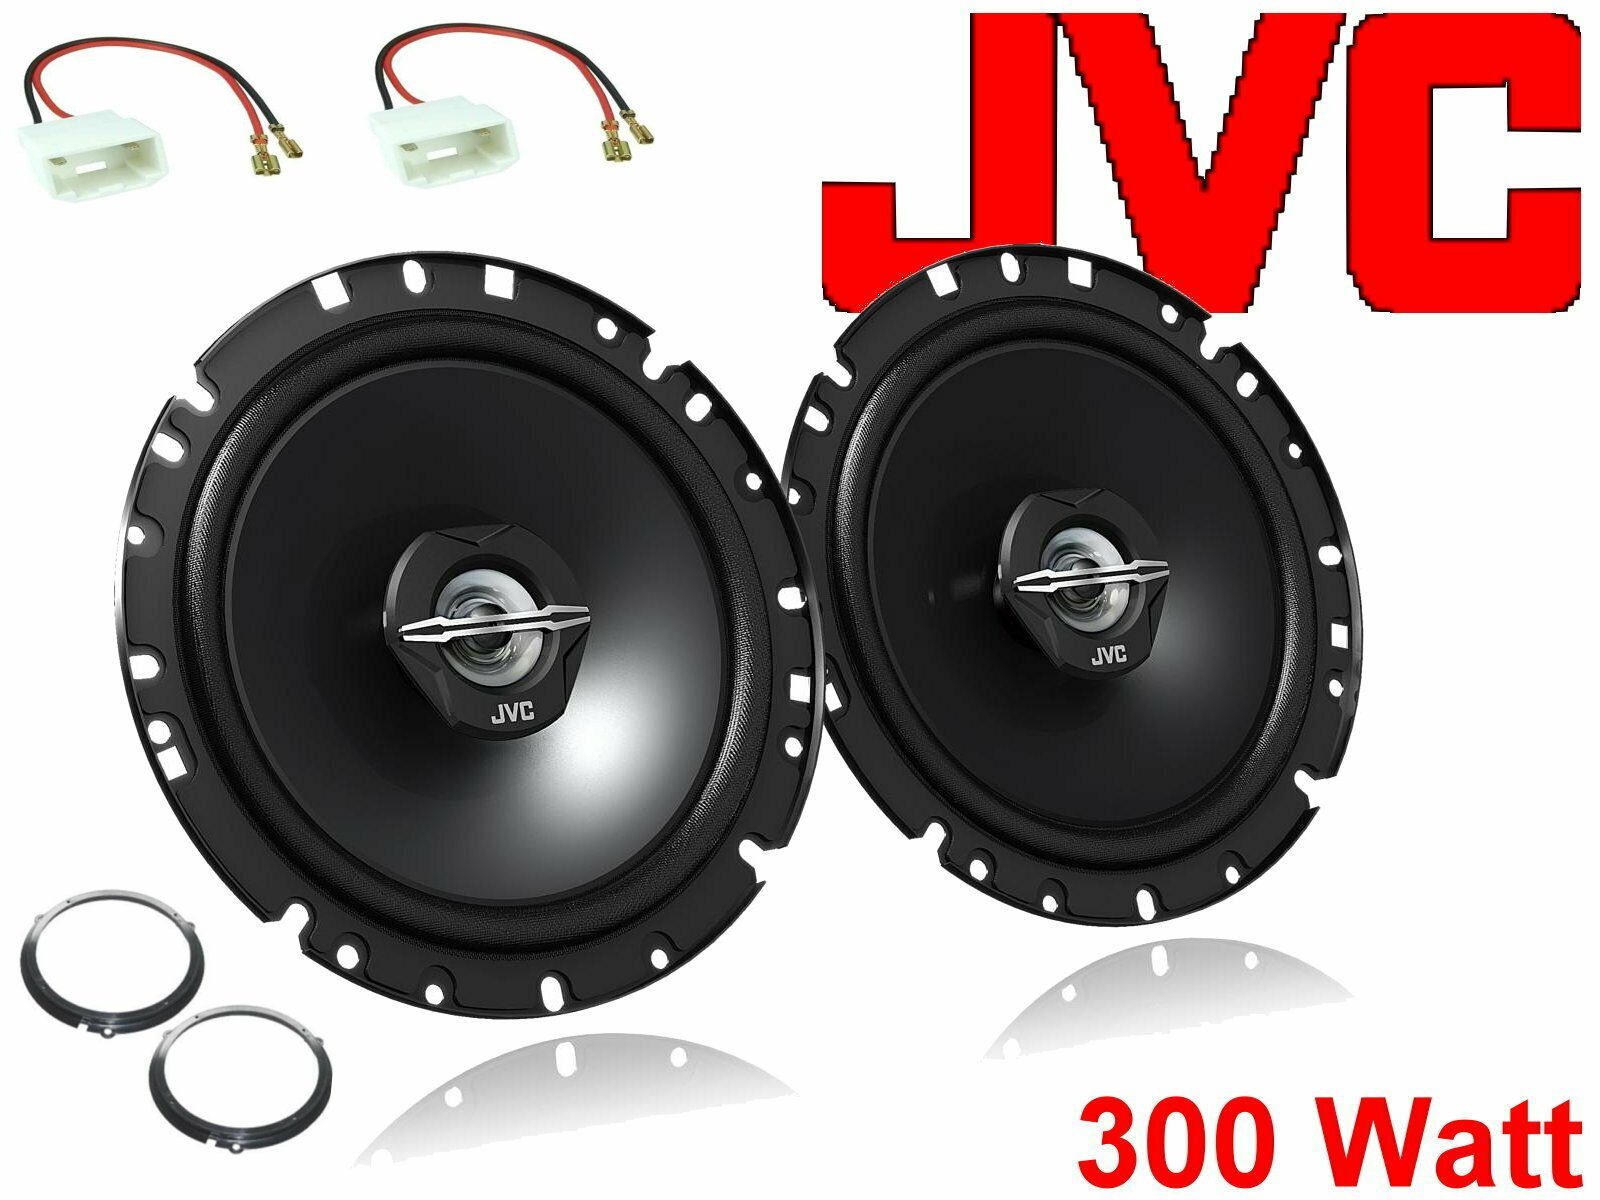 DSX JVC 300 W passend für Ford Ka Ru8 Bj 08/08-16 Lau Auto-Lautsprecher (30 W)